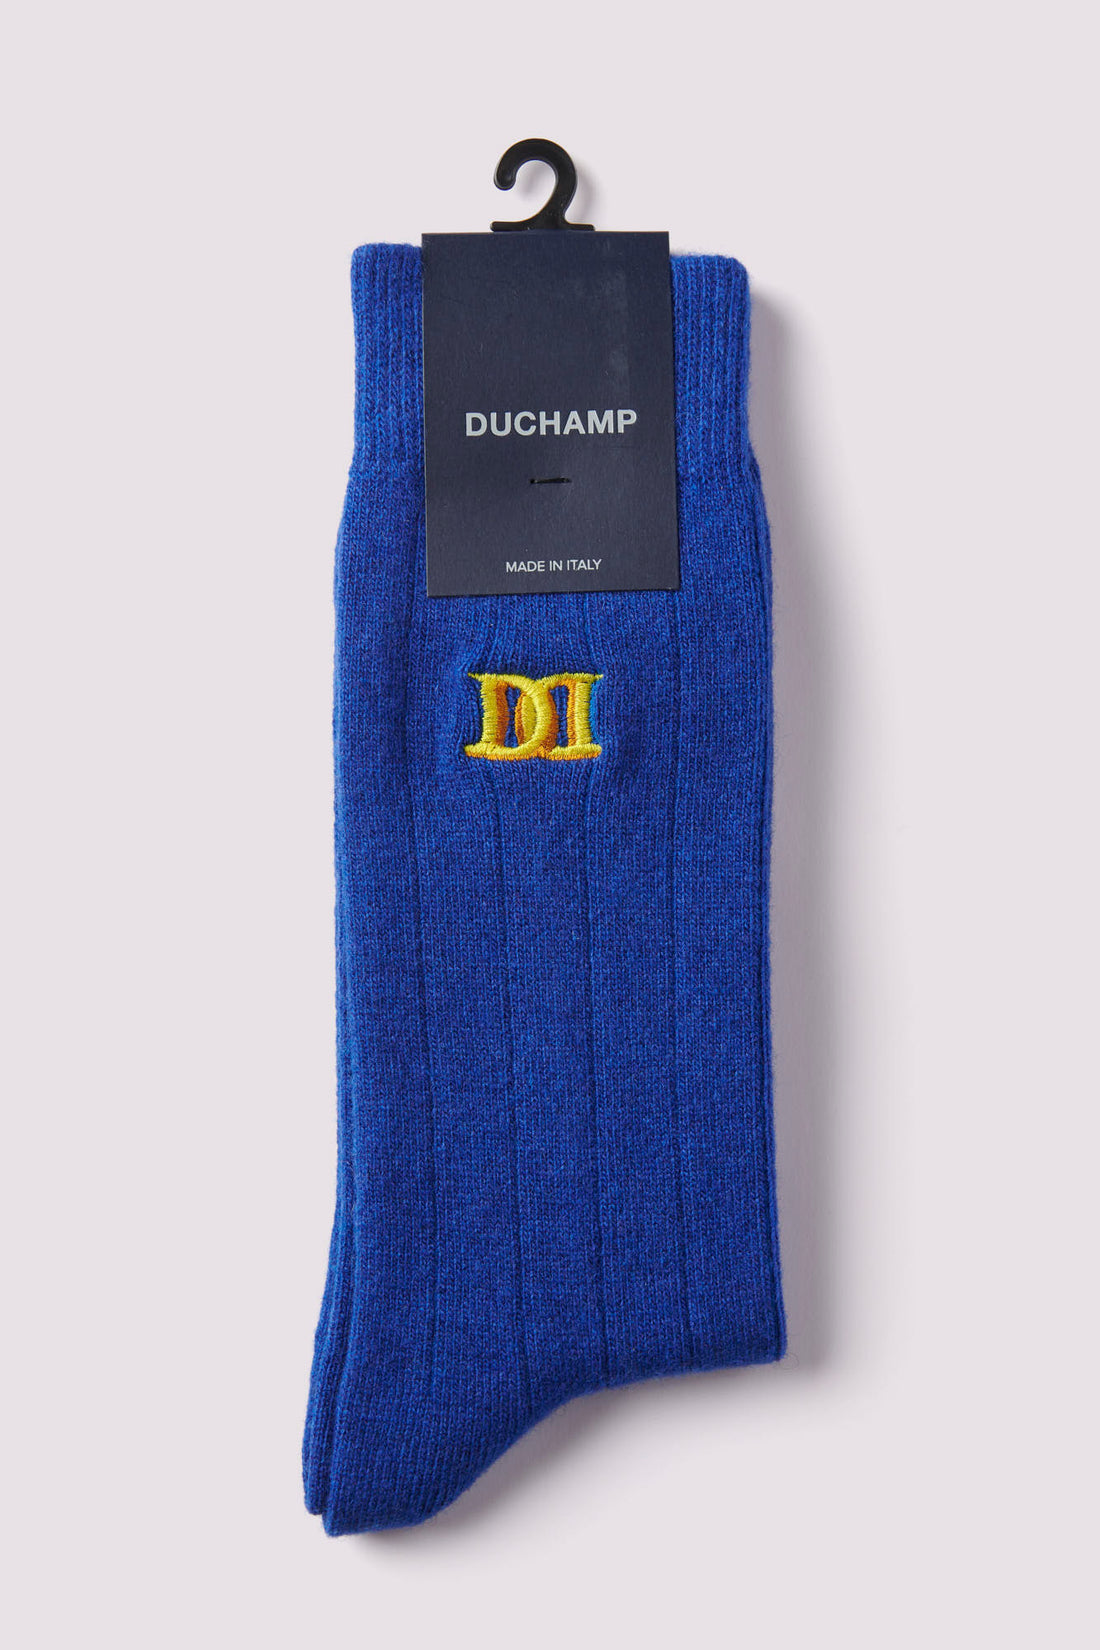 Chunky Cashmere Mix Rib Socks in Oxford Blue